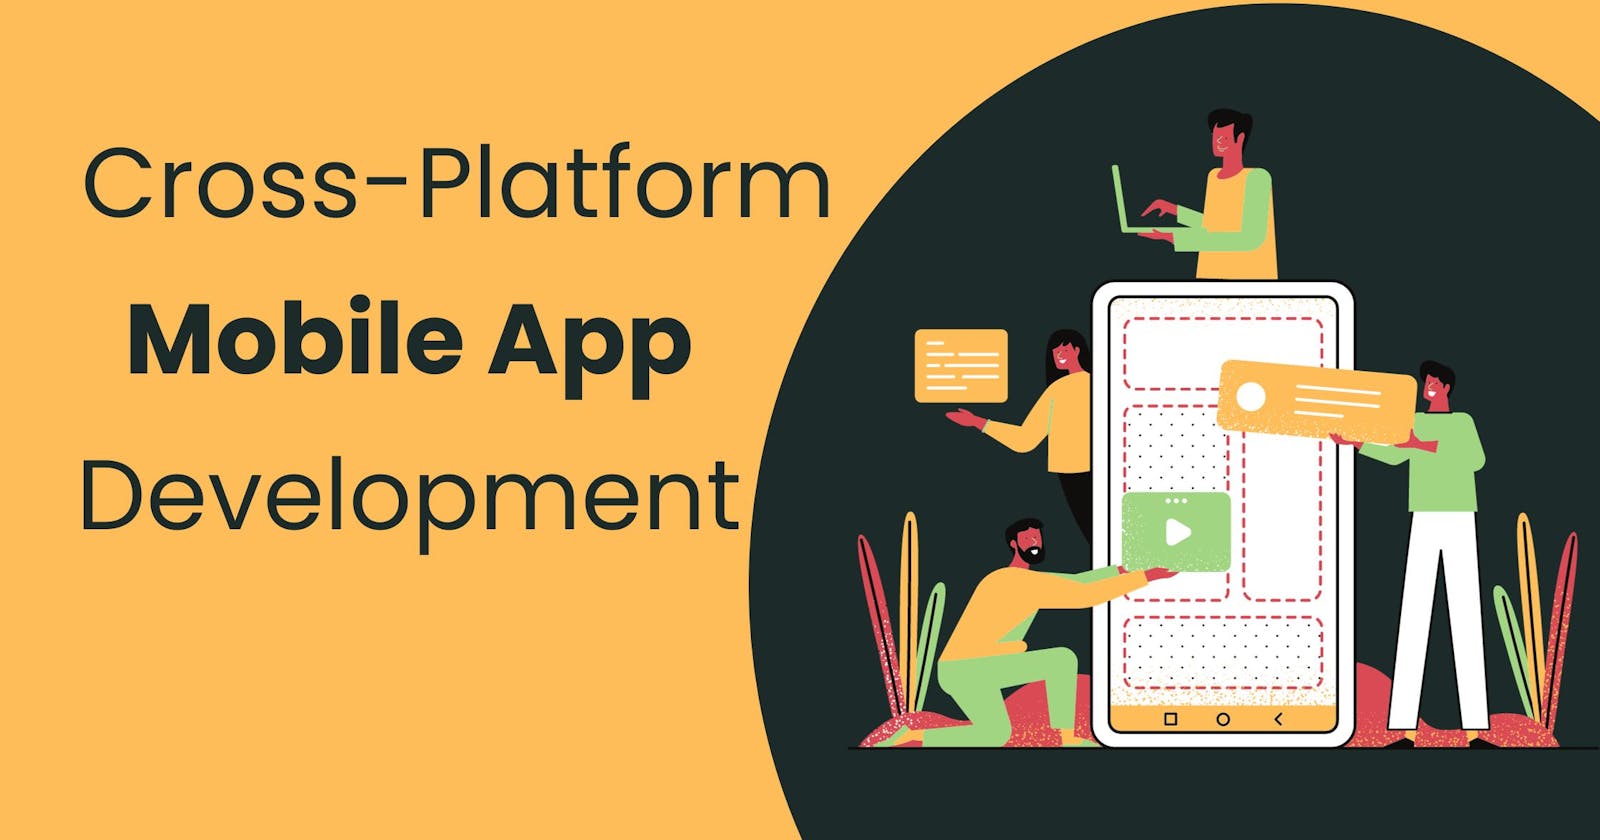 Cross-Platform Mobile Apps Development — Pros and Cons